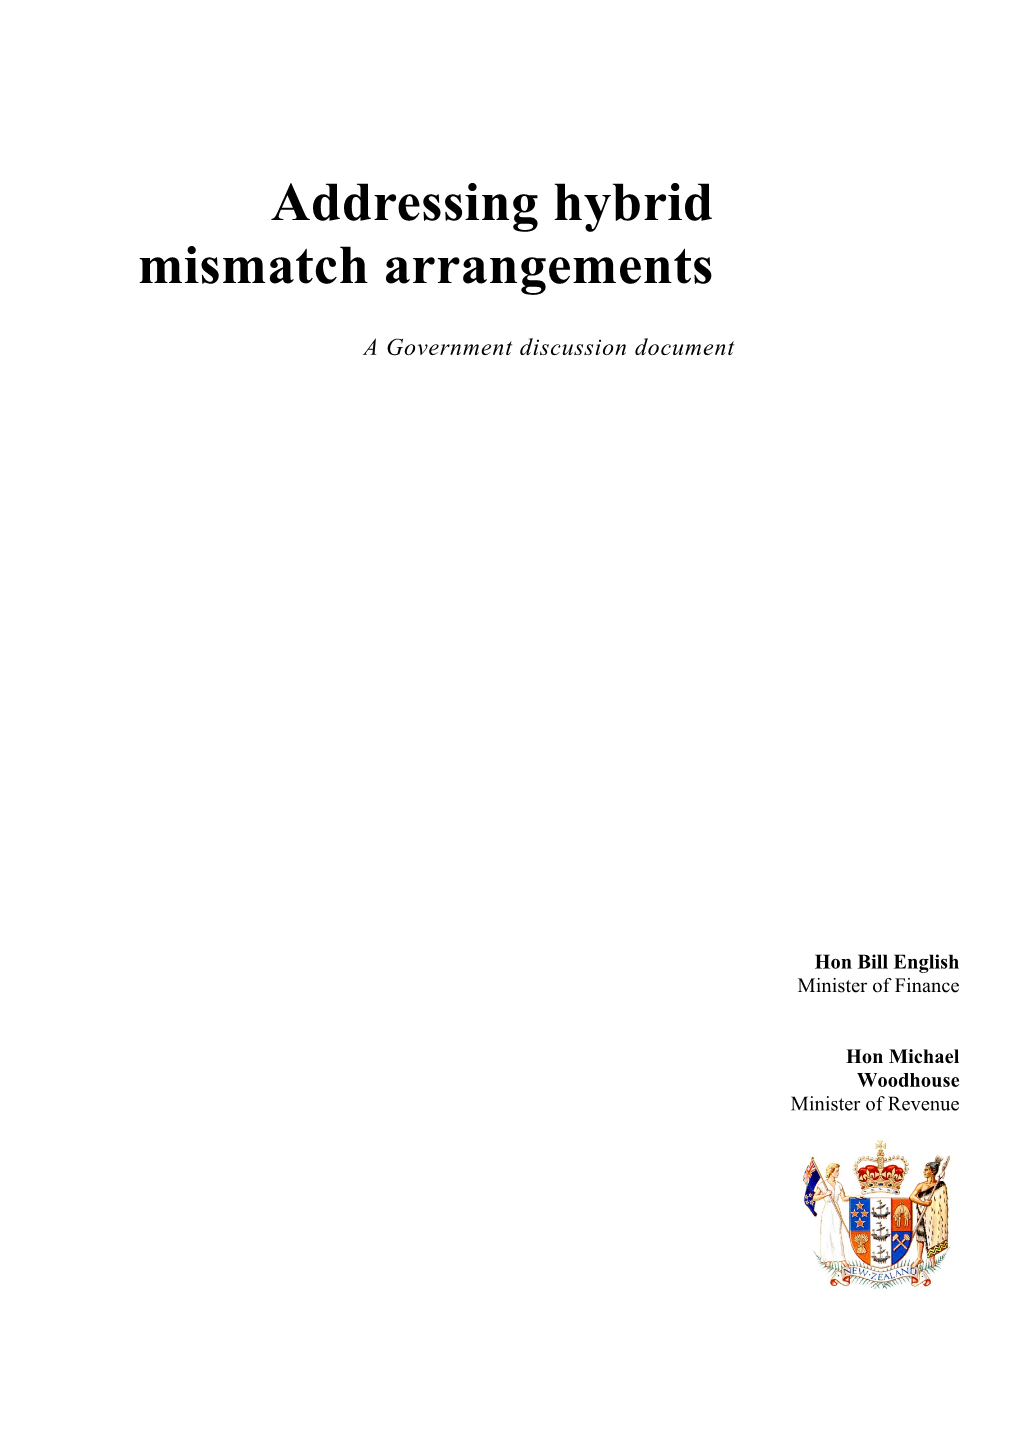 Addressing Hybrid Mismatch Arrangements - a Government Discussion Document (September 2016)